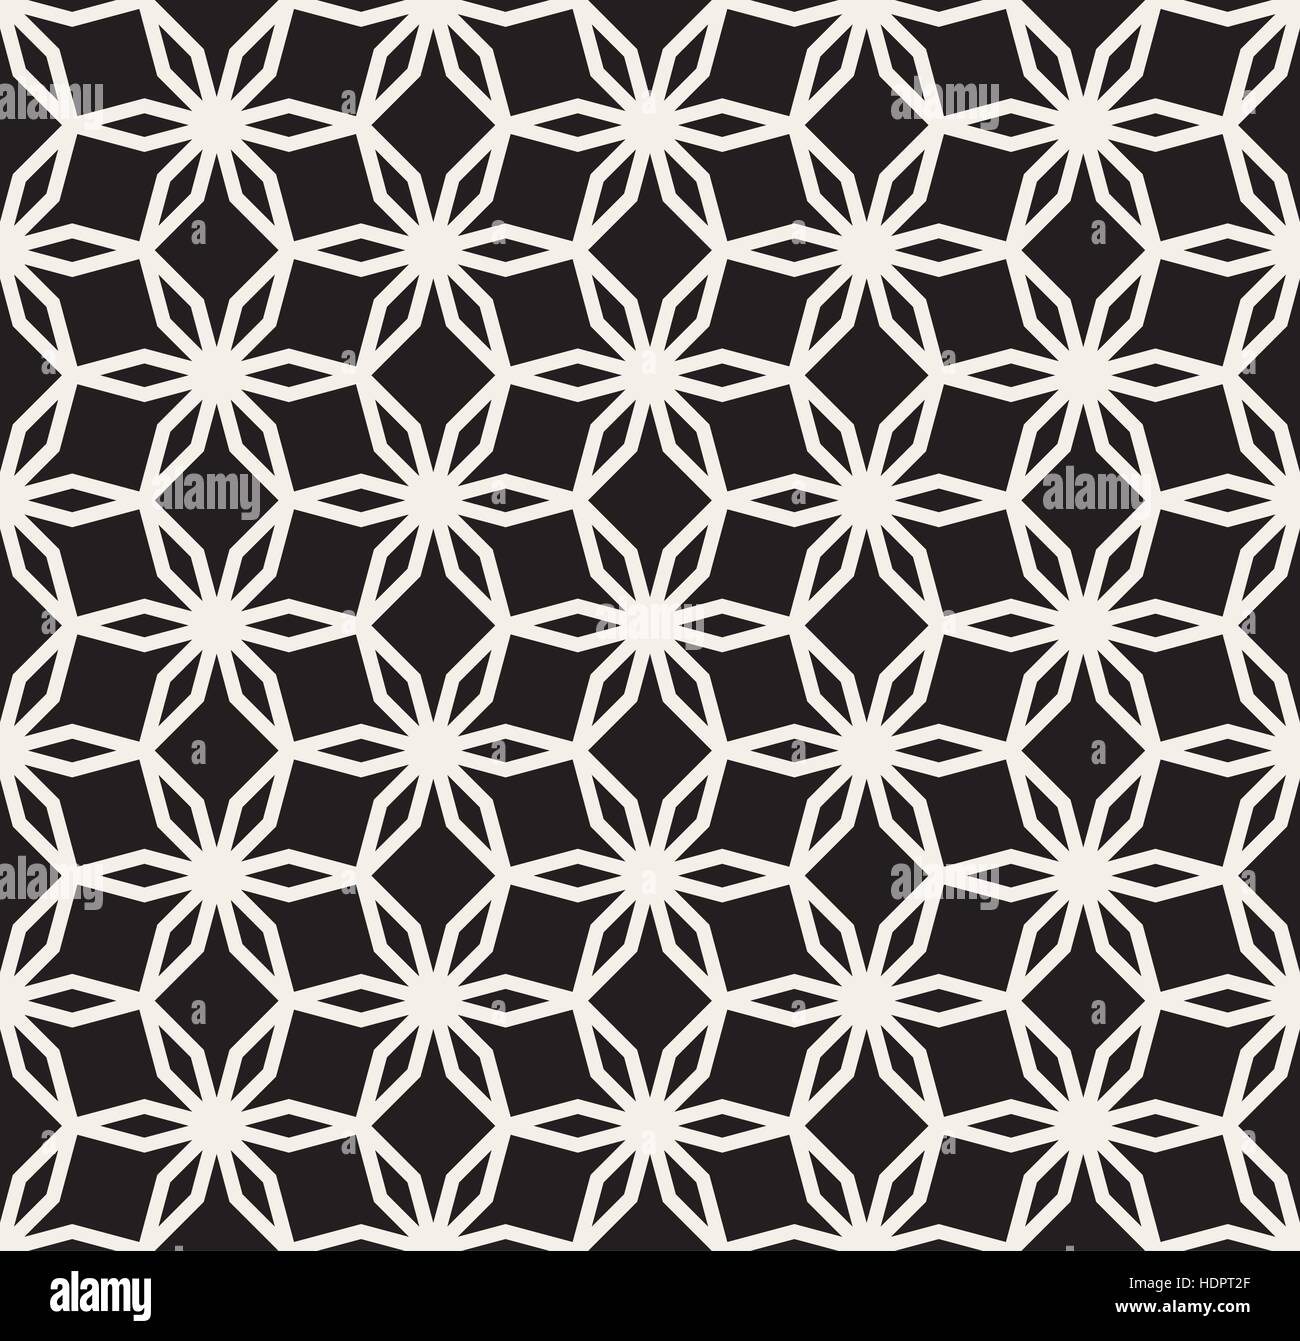 Vector Black And White nahtlose sechseckige Sterne Blütenspitze Linienmuster Stock Vektor